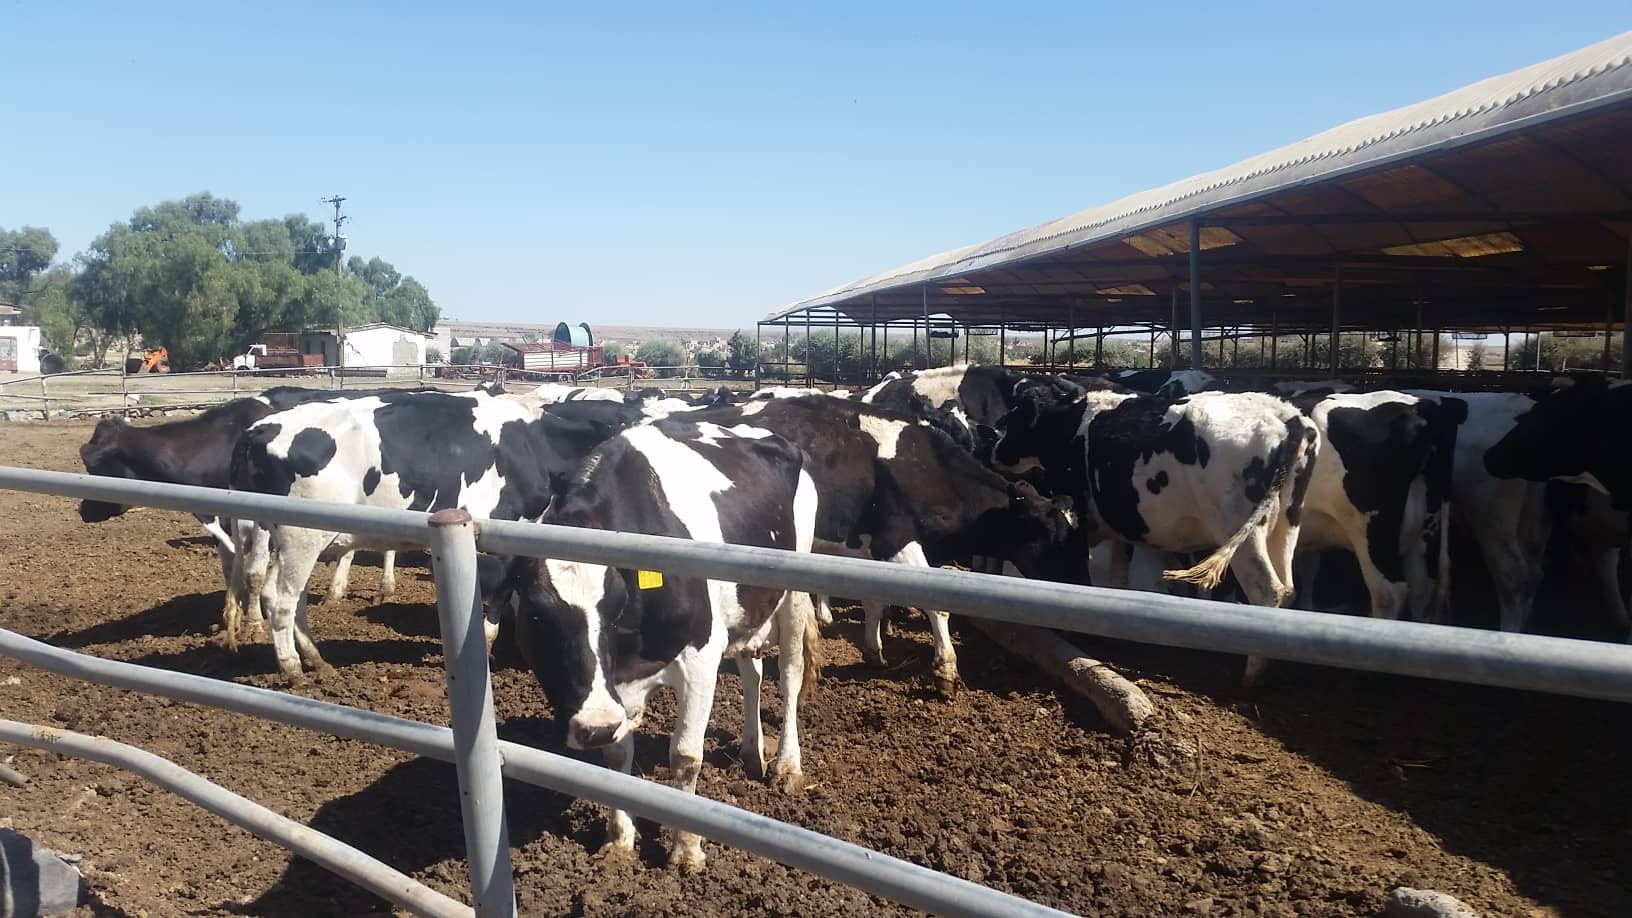 dhamar rosabah farm cows 3 Nov 2018 for OWAP AR Hisham picture.jpg